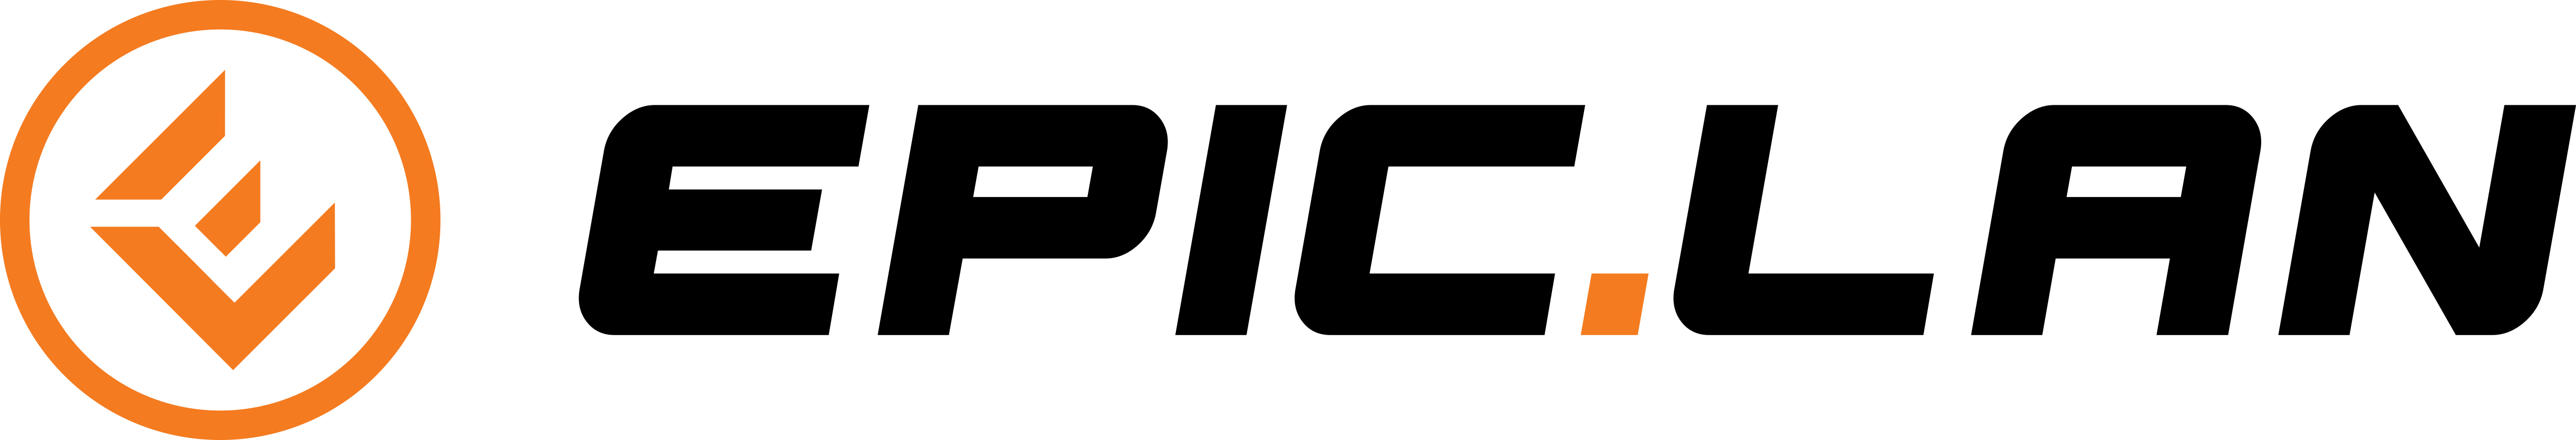 epiclan logo